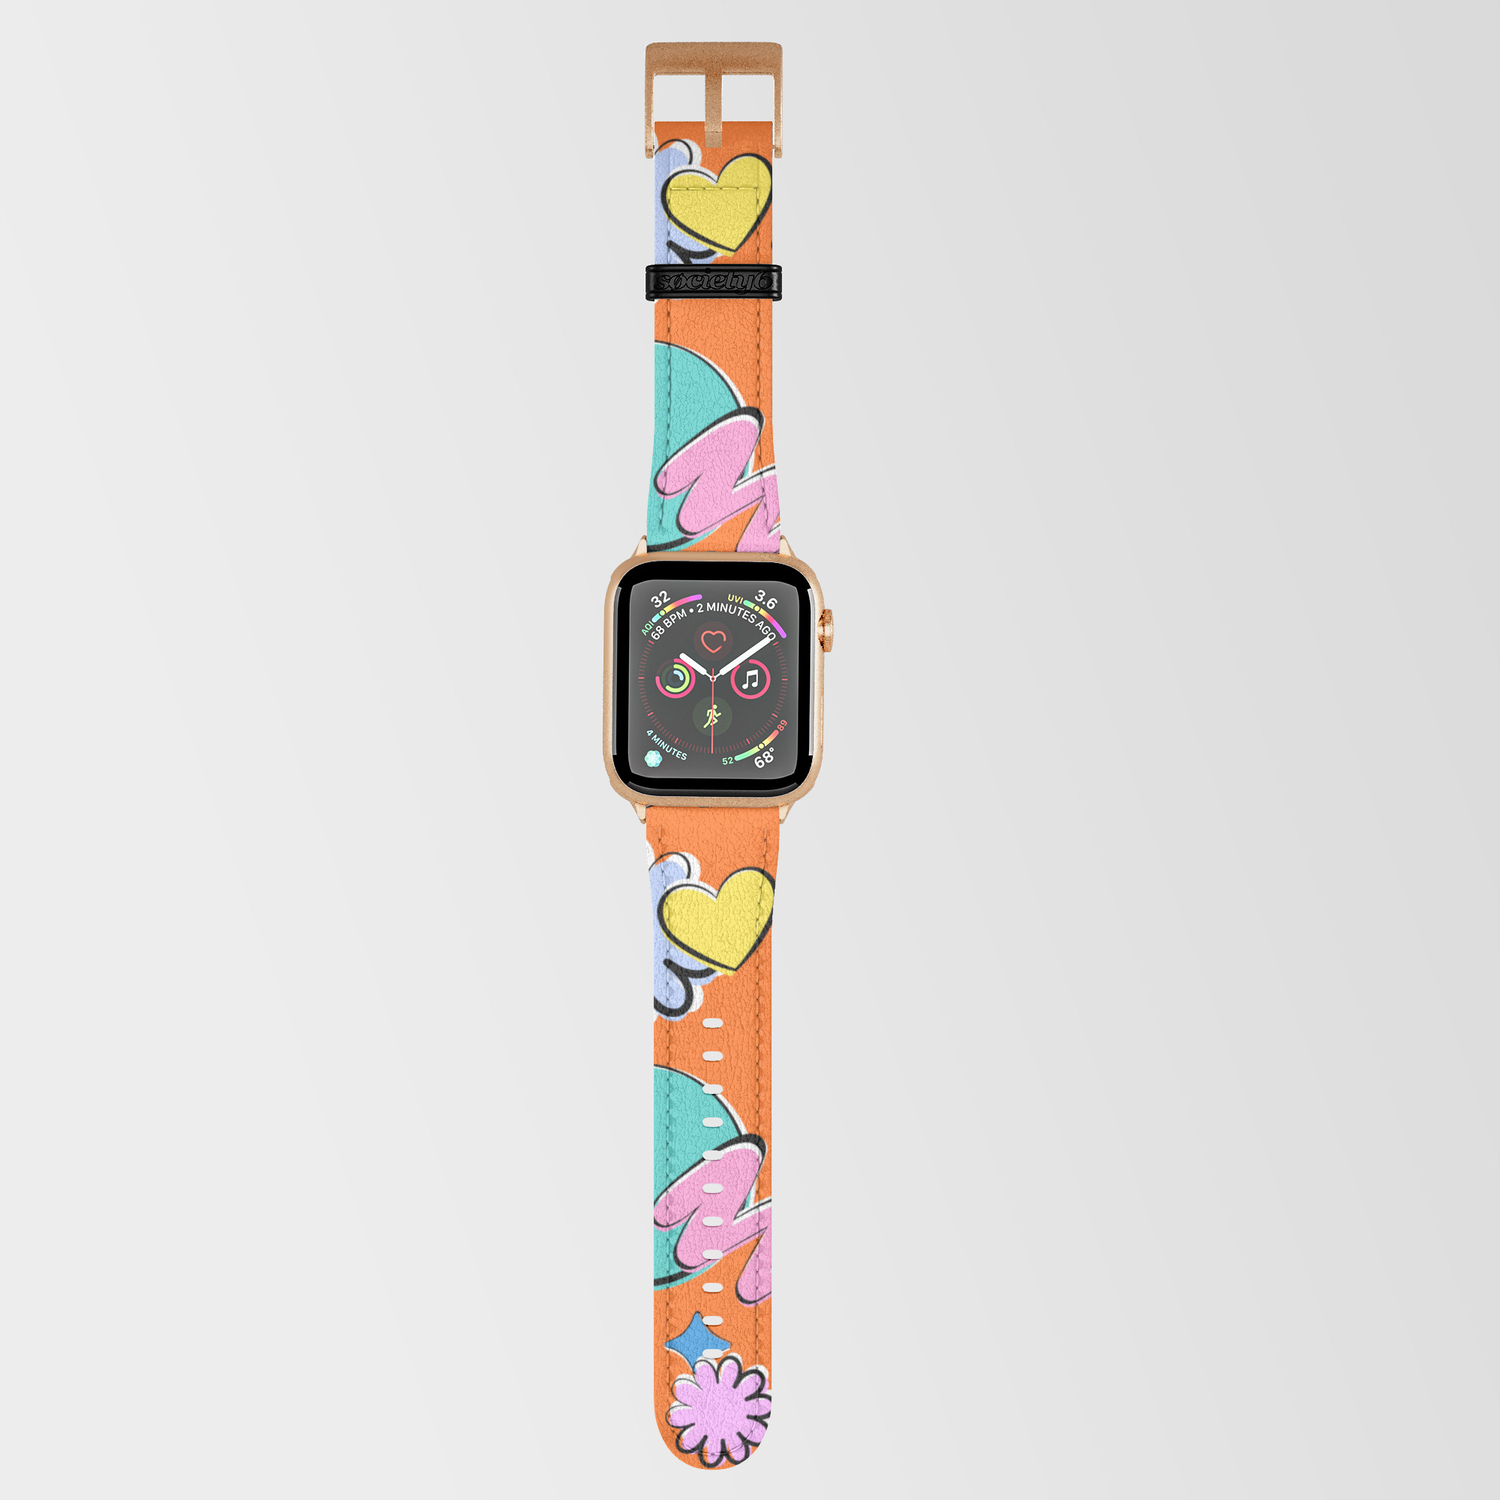 Bts Apple Watch Wallpapers